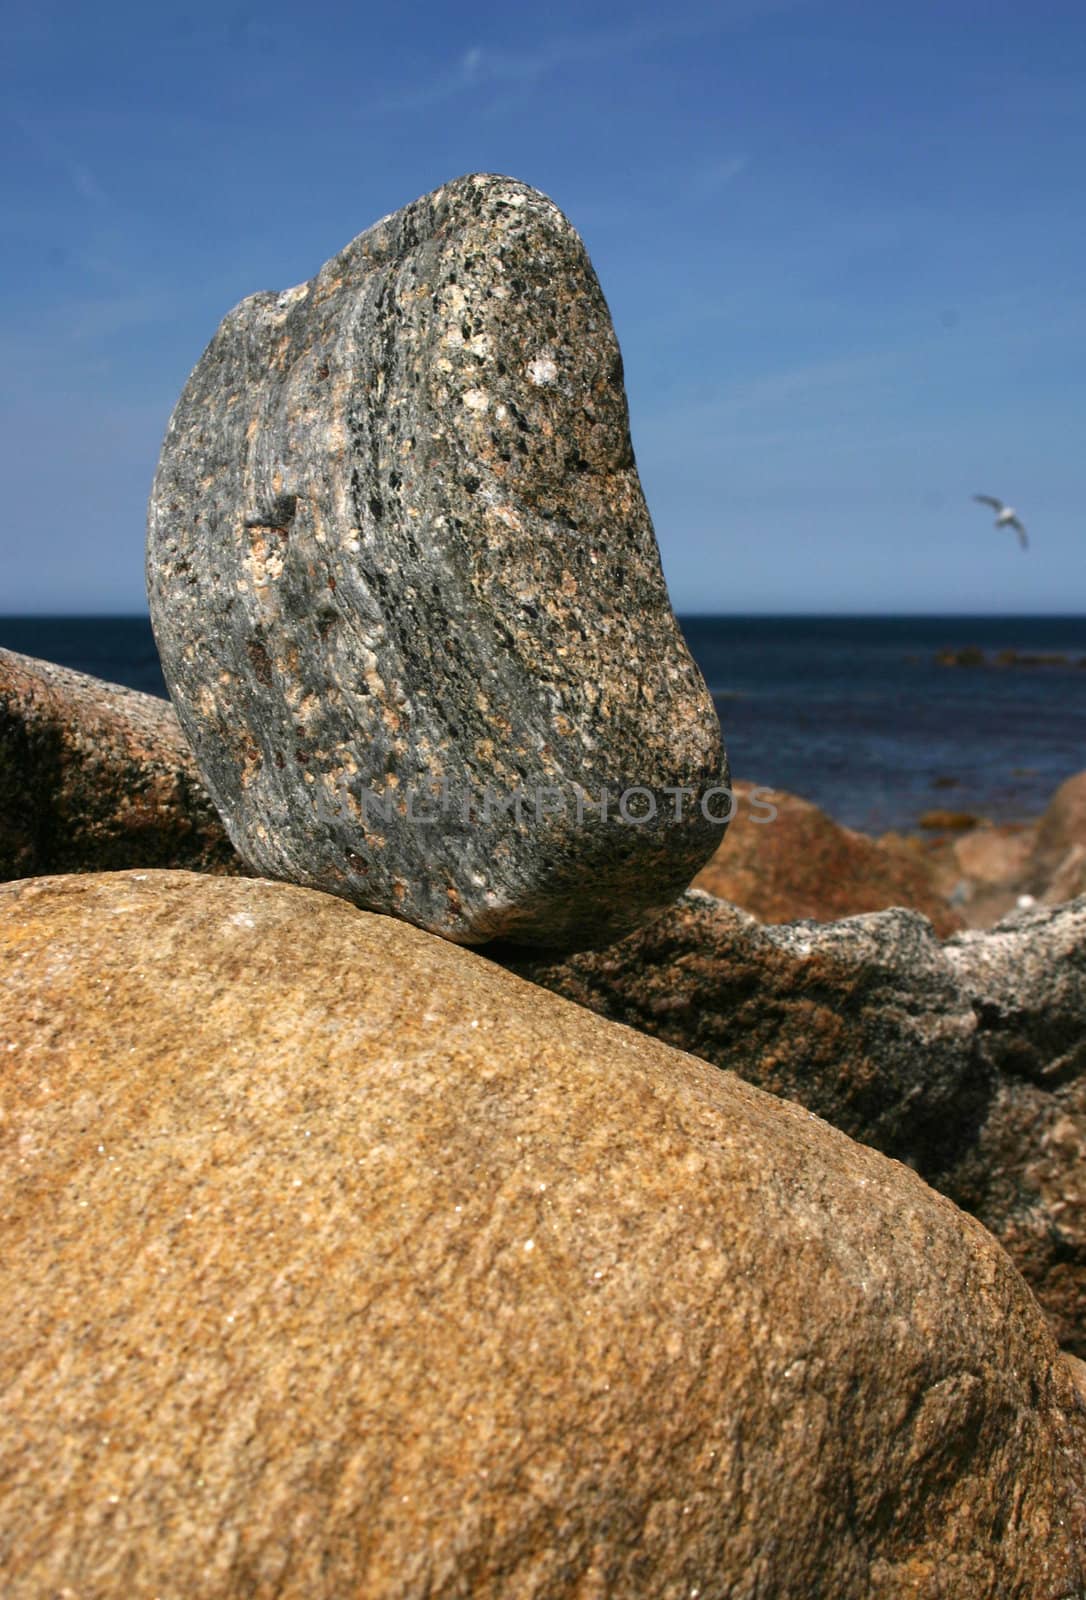 A perched stone on a rocky coastline